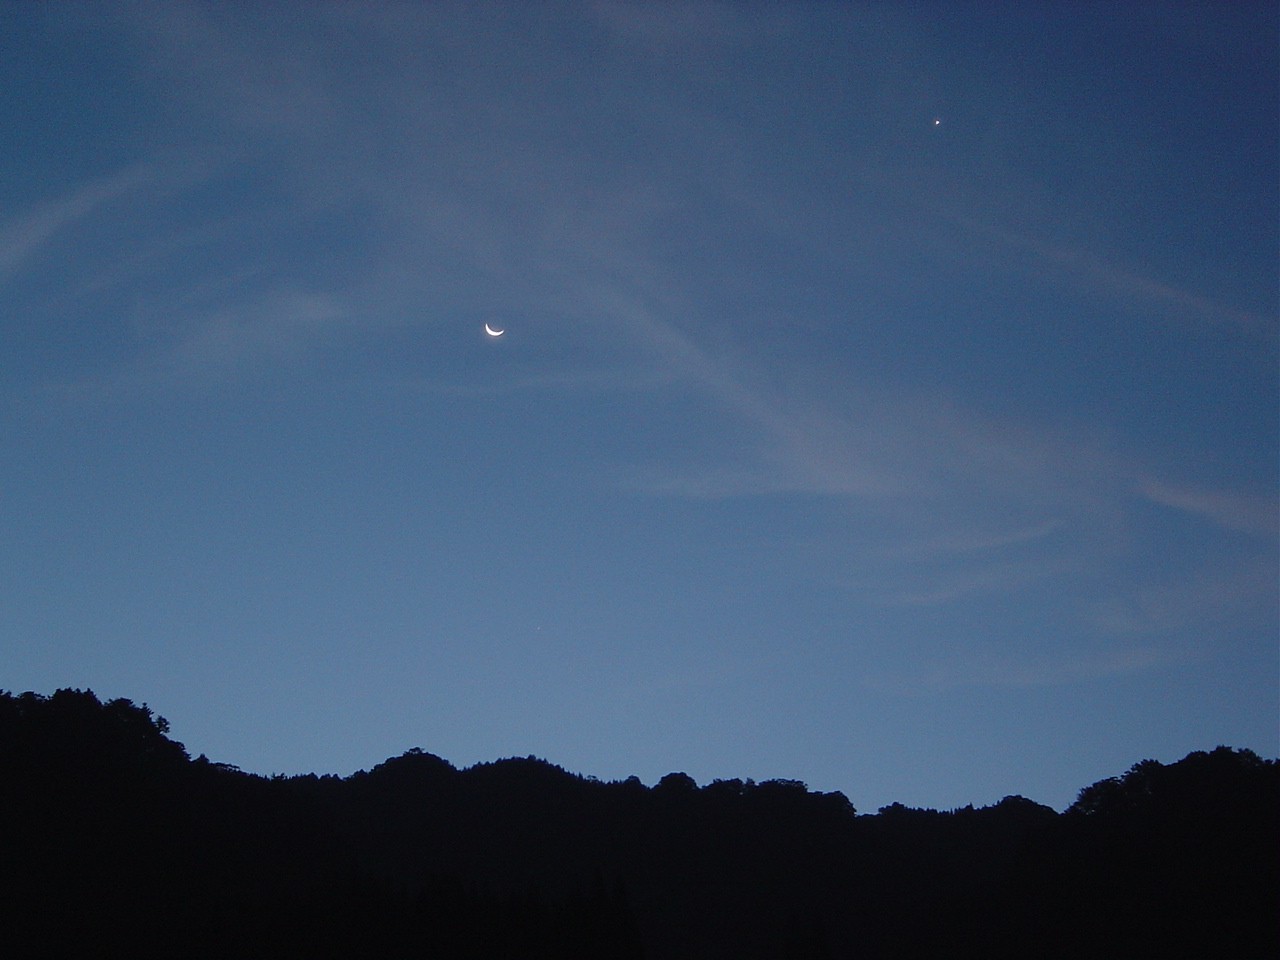 Dawn2 (158k image)